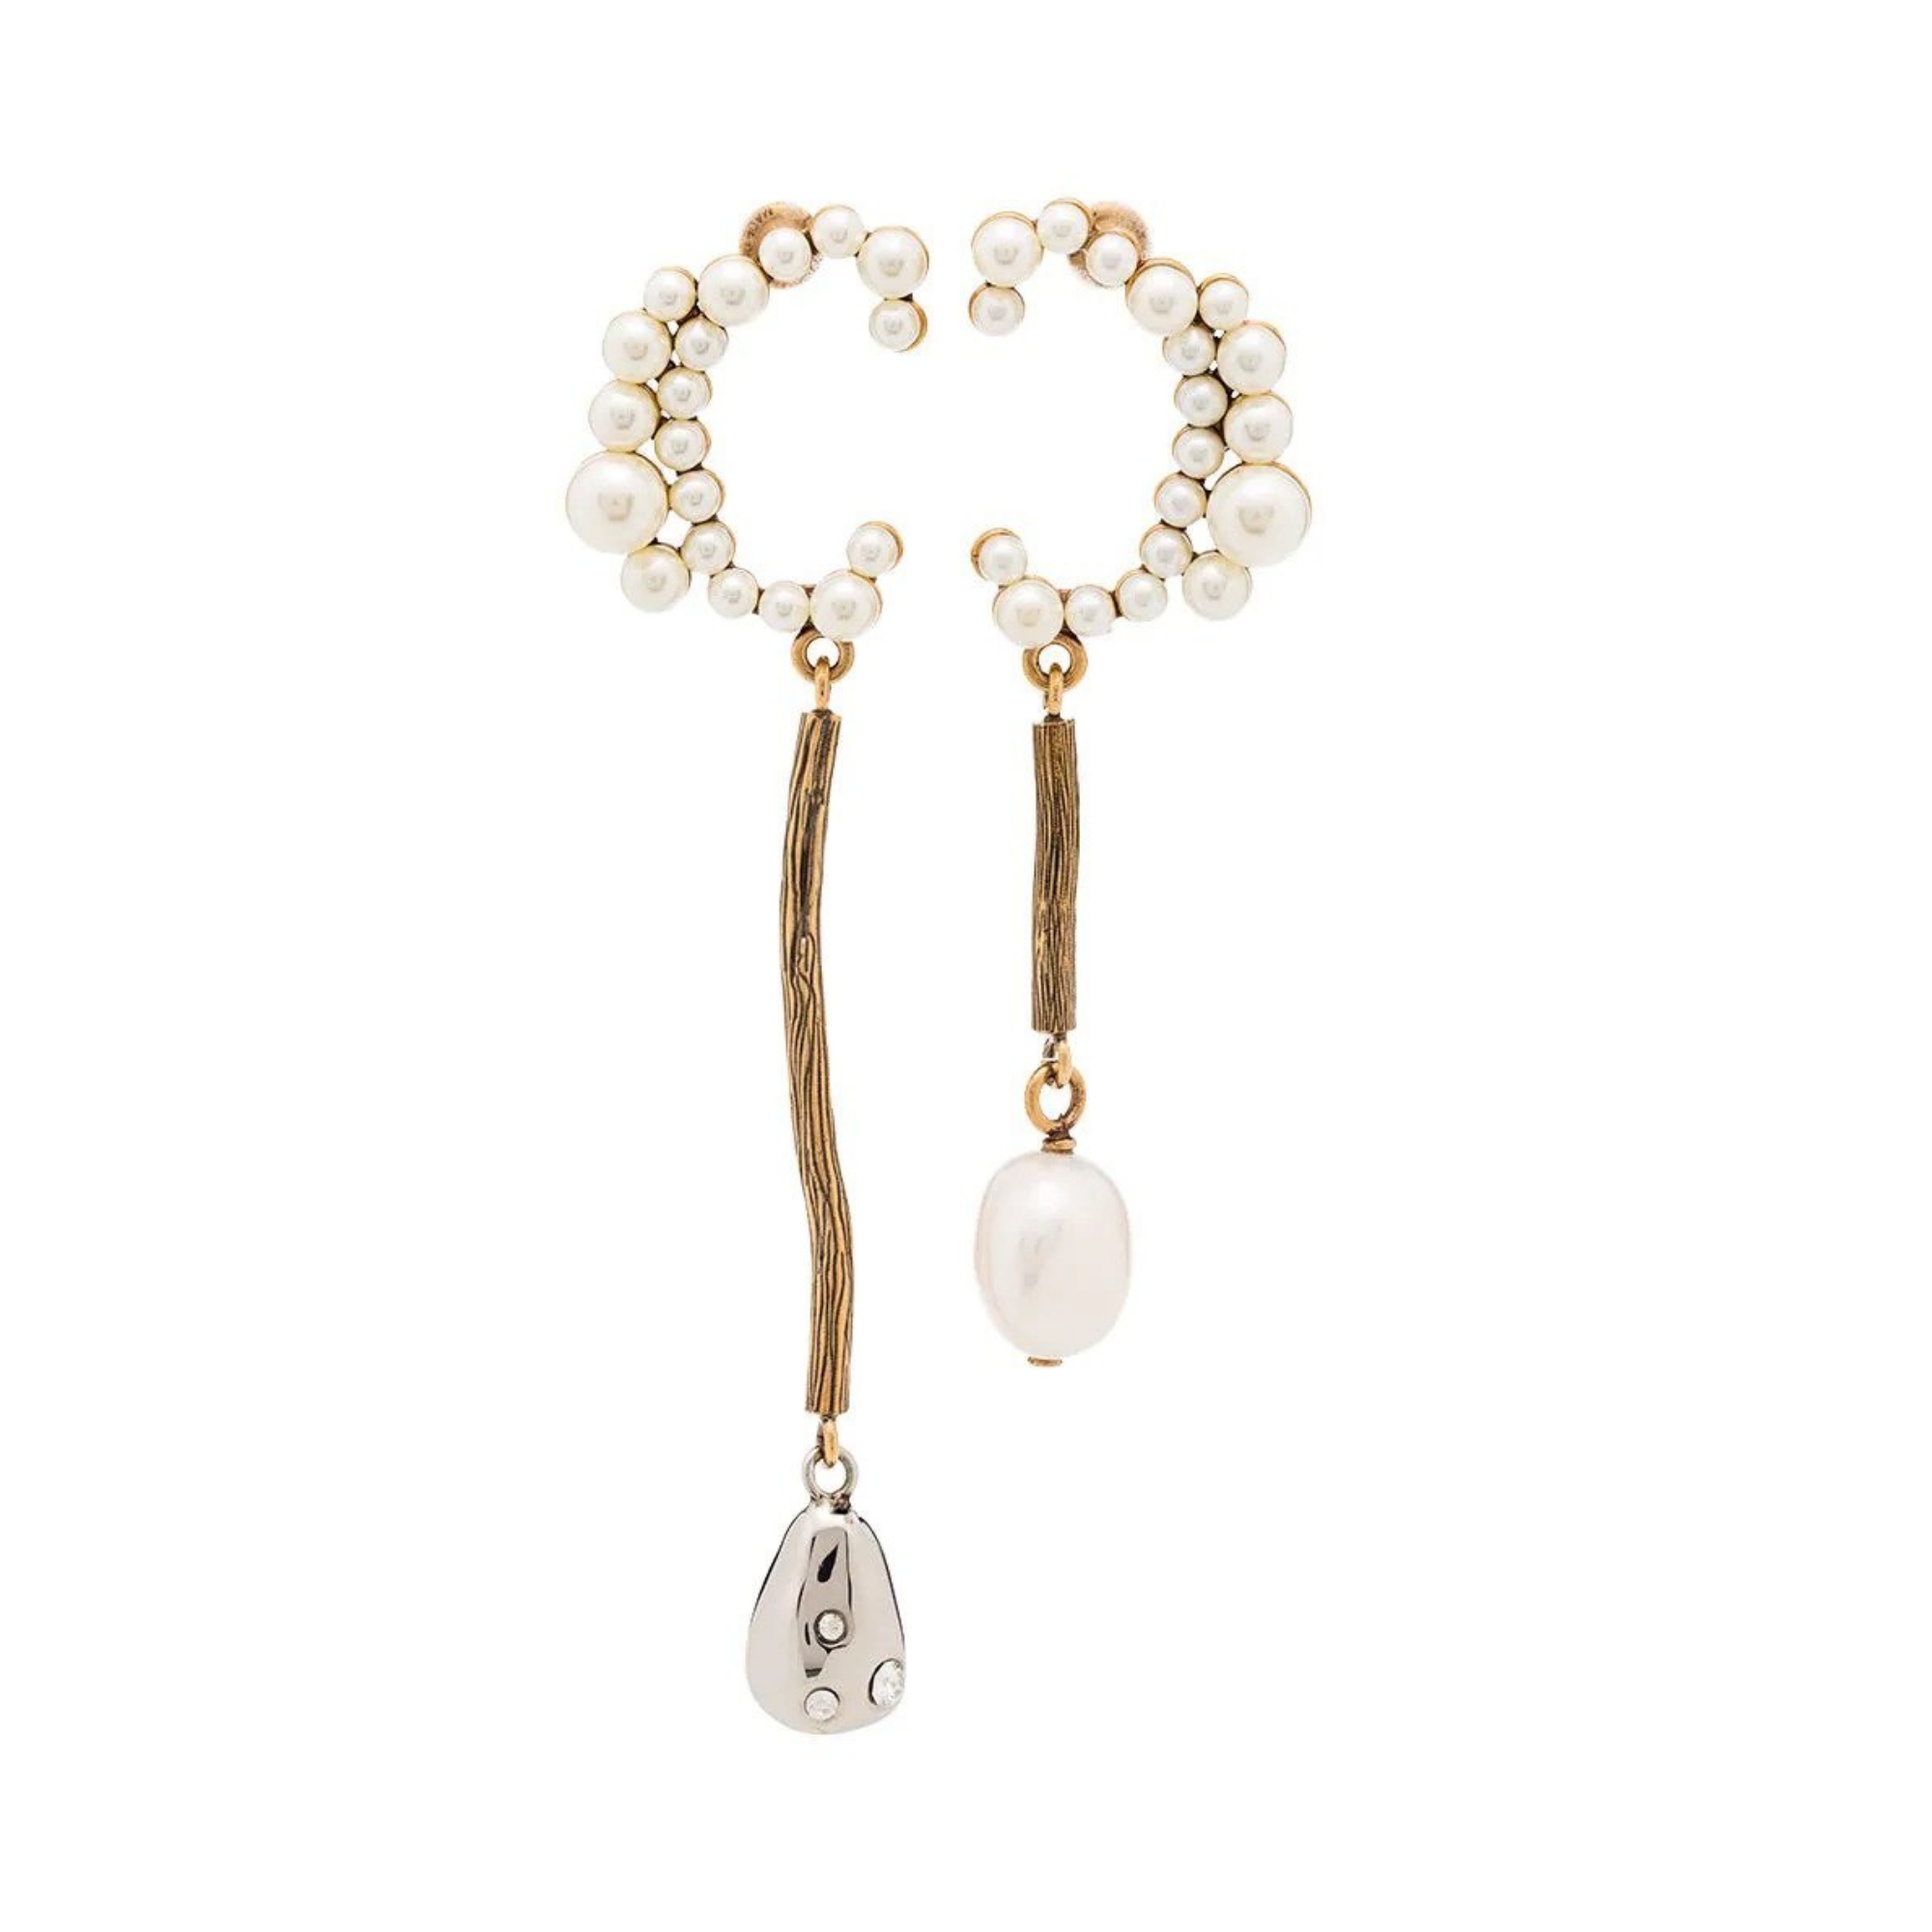 Chloe Pearl-Embellished Asymmetric Earrings, $620